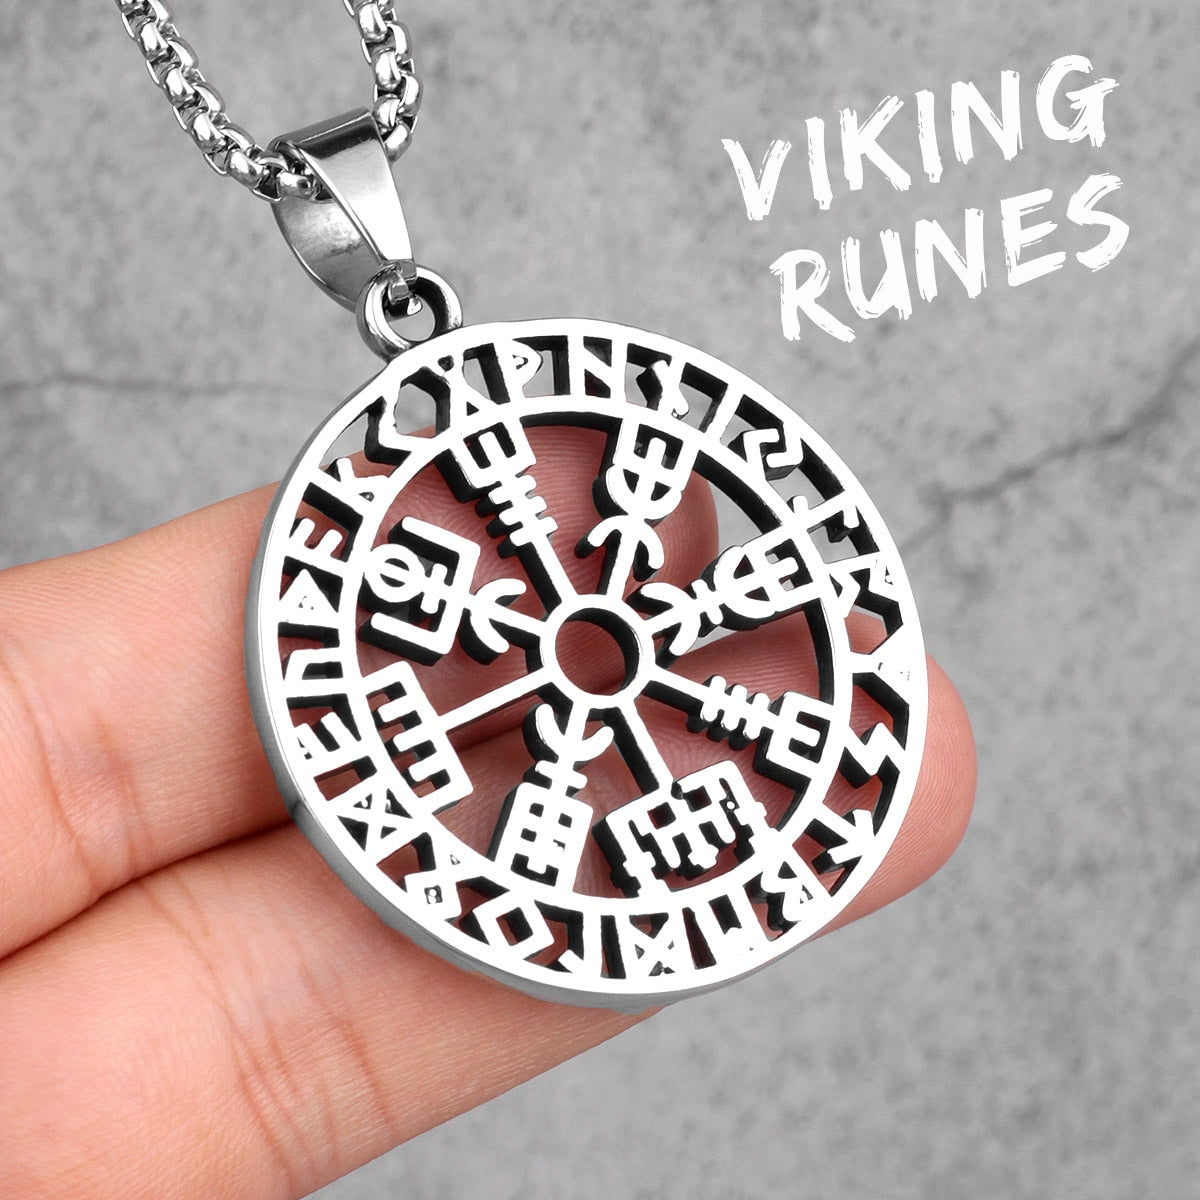 Stainless Steel Viking Pirate Odin Runes Men Necklaces Pendants Chain Punk for Boyfriend Male Jewelry Creativity Gift N445-Viking Runes